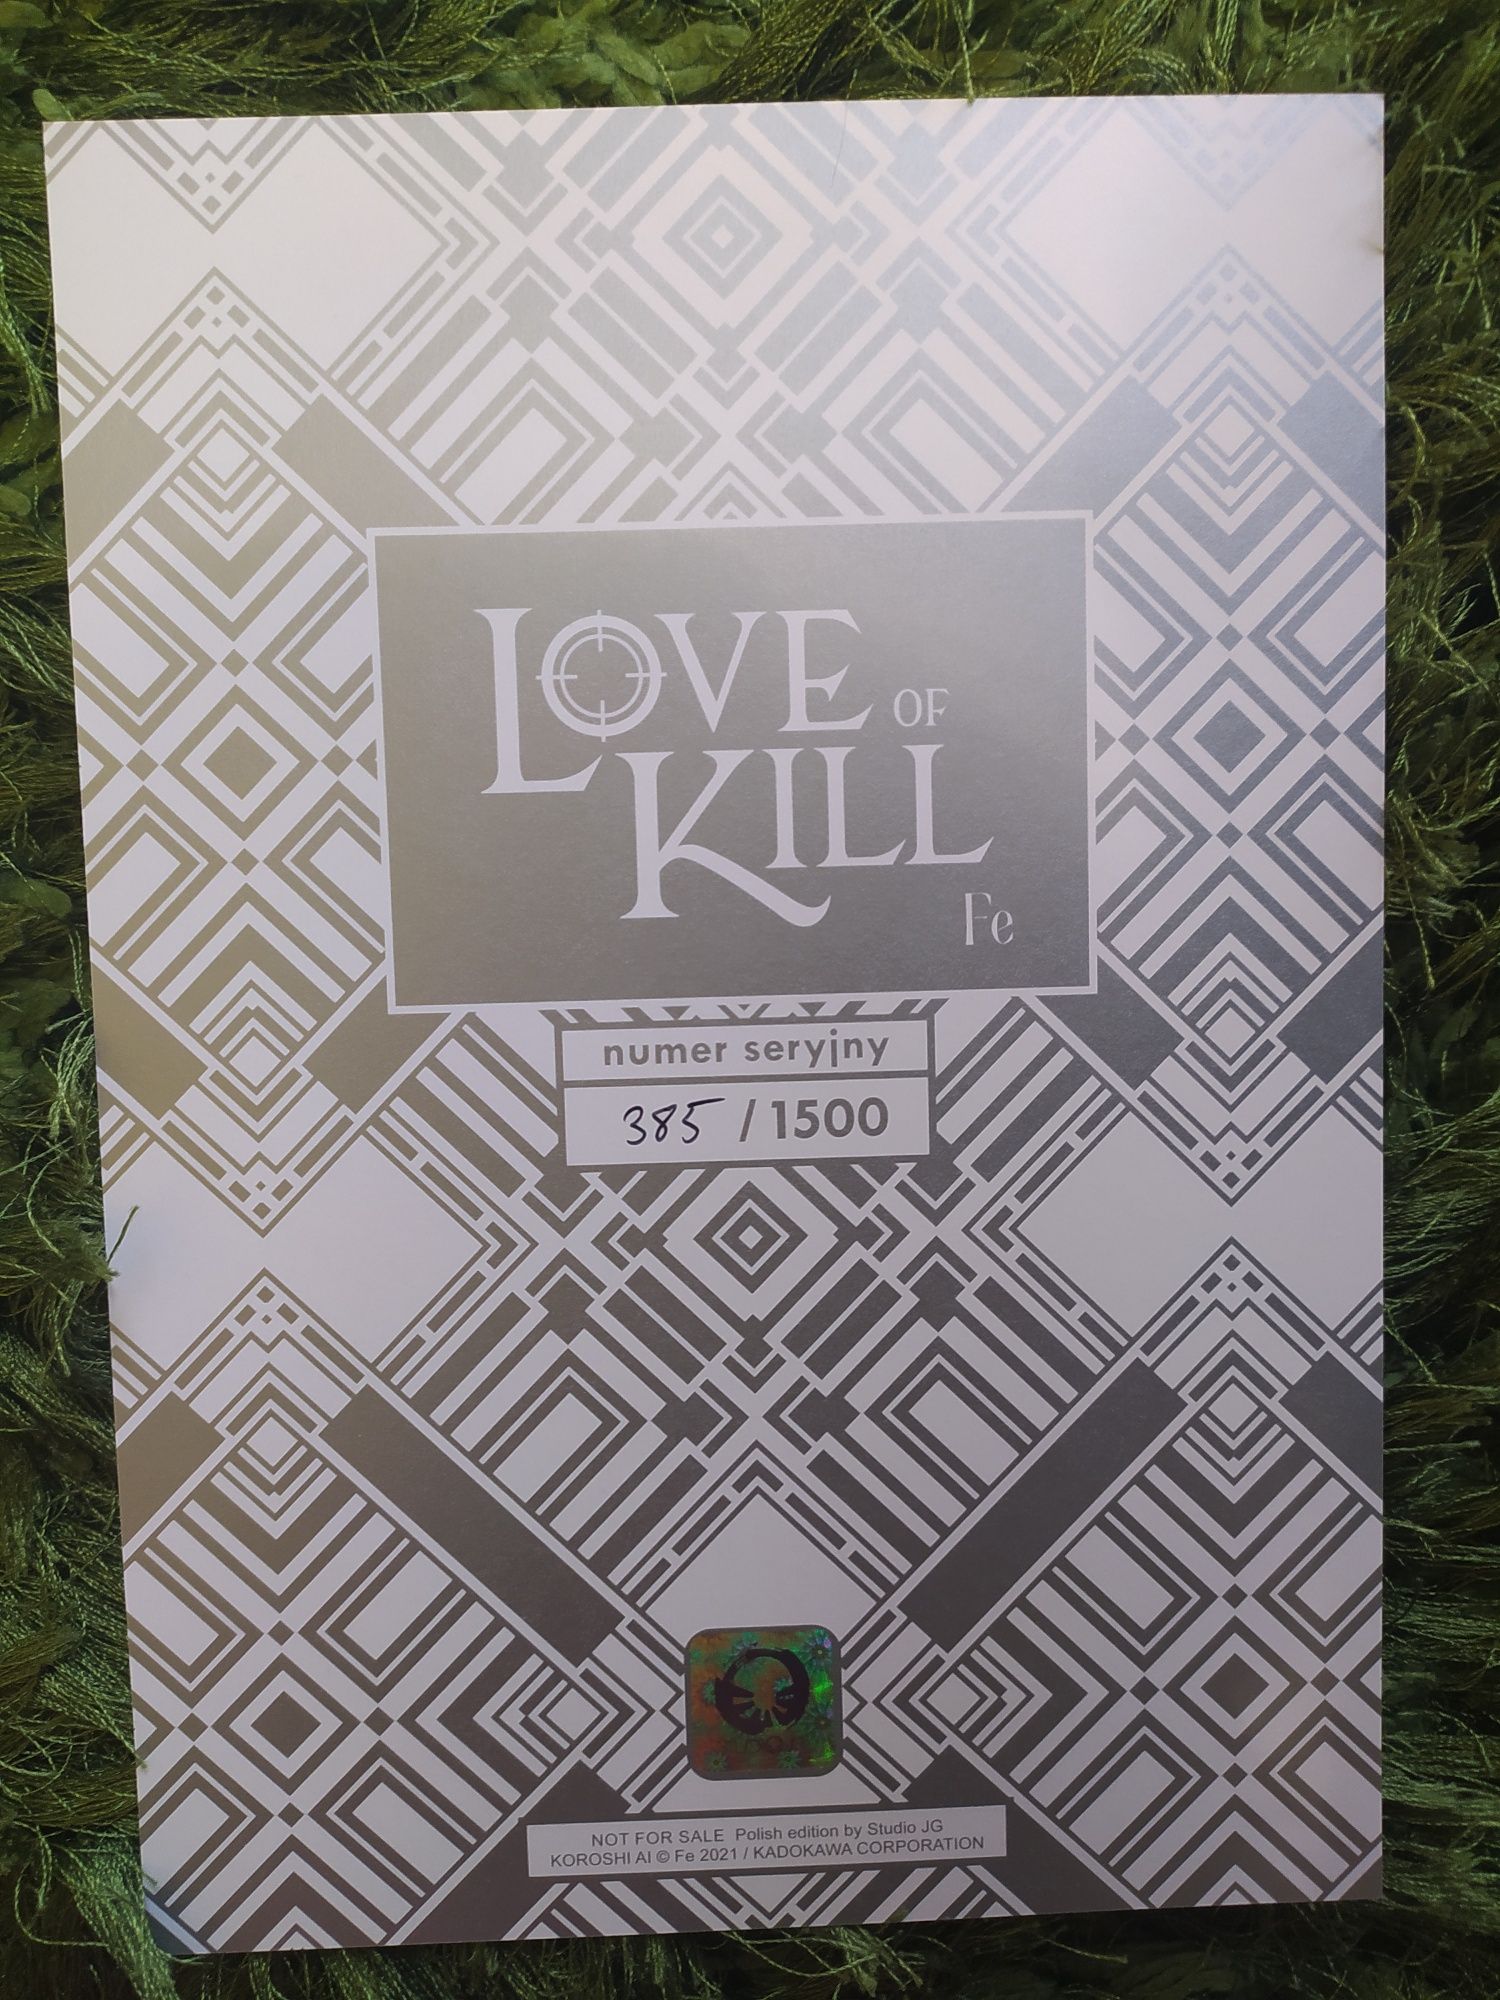 Love of kill manga + naklejka + karta festiwalowa kolekcjonerska